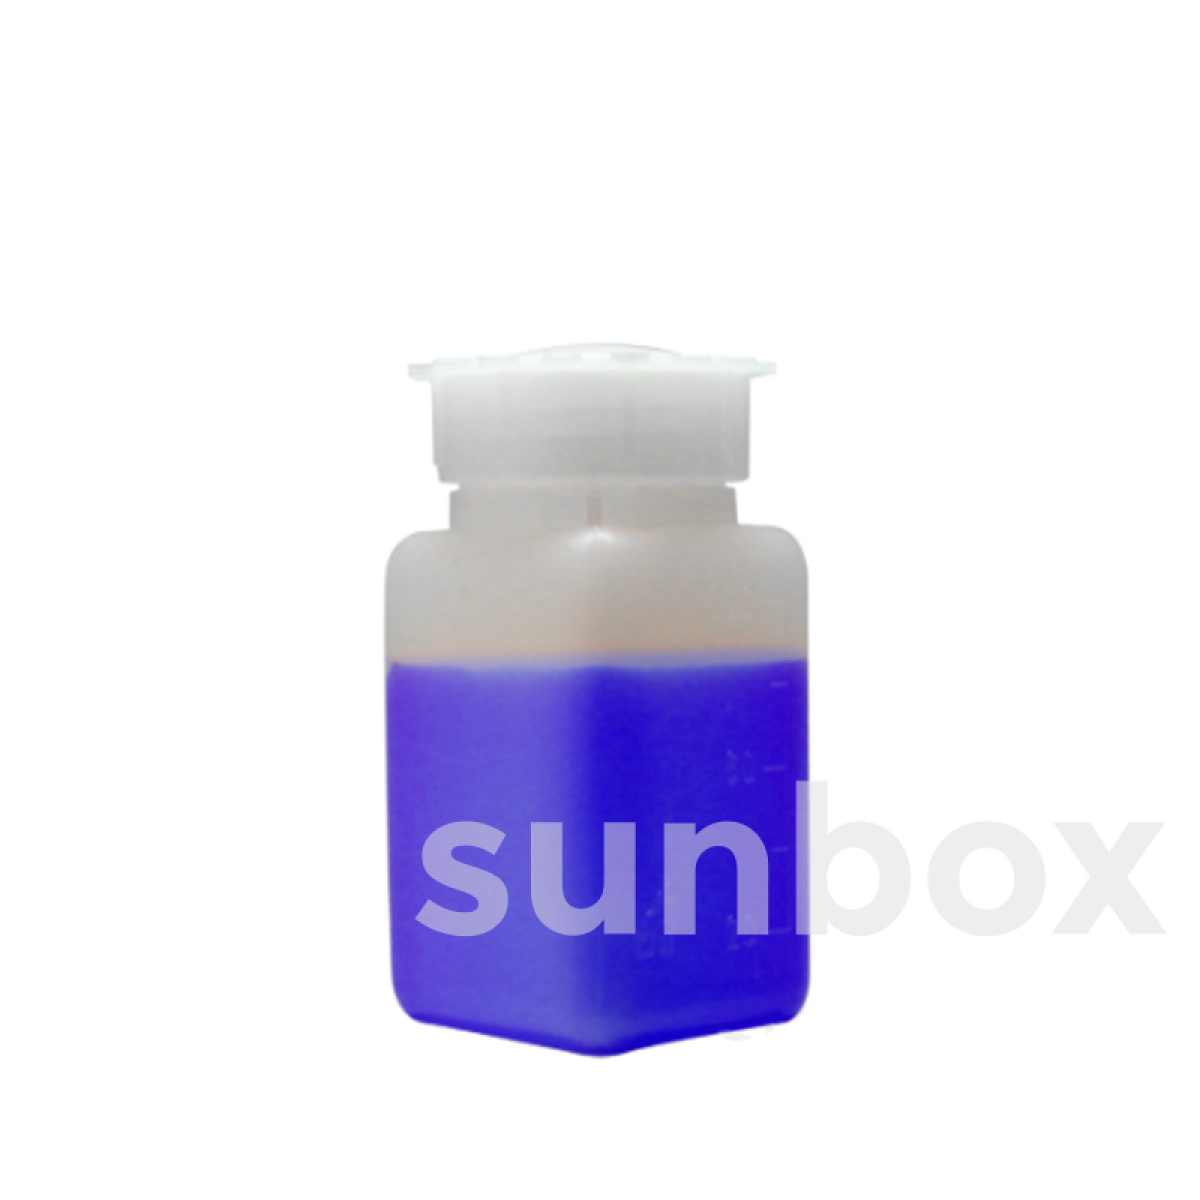 sunbox_prod_4